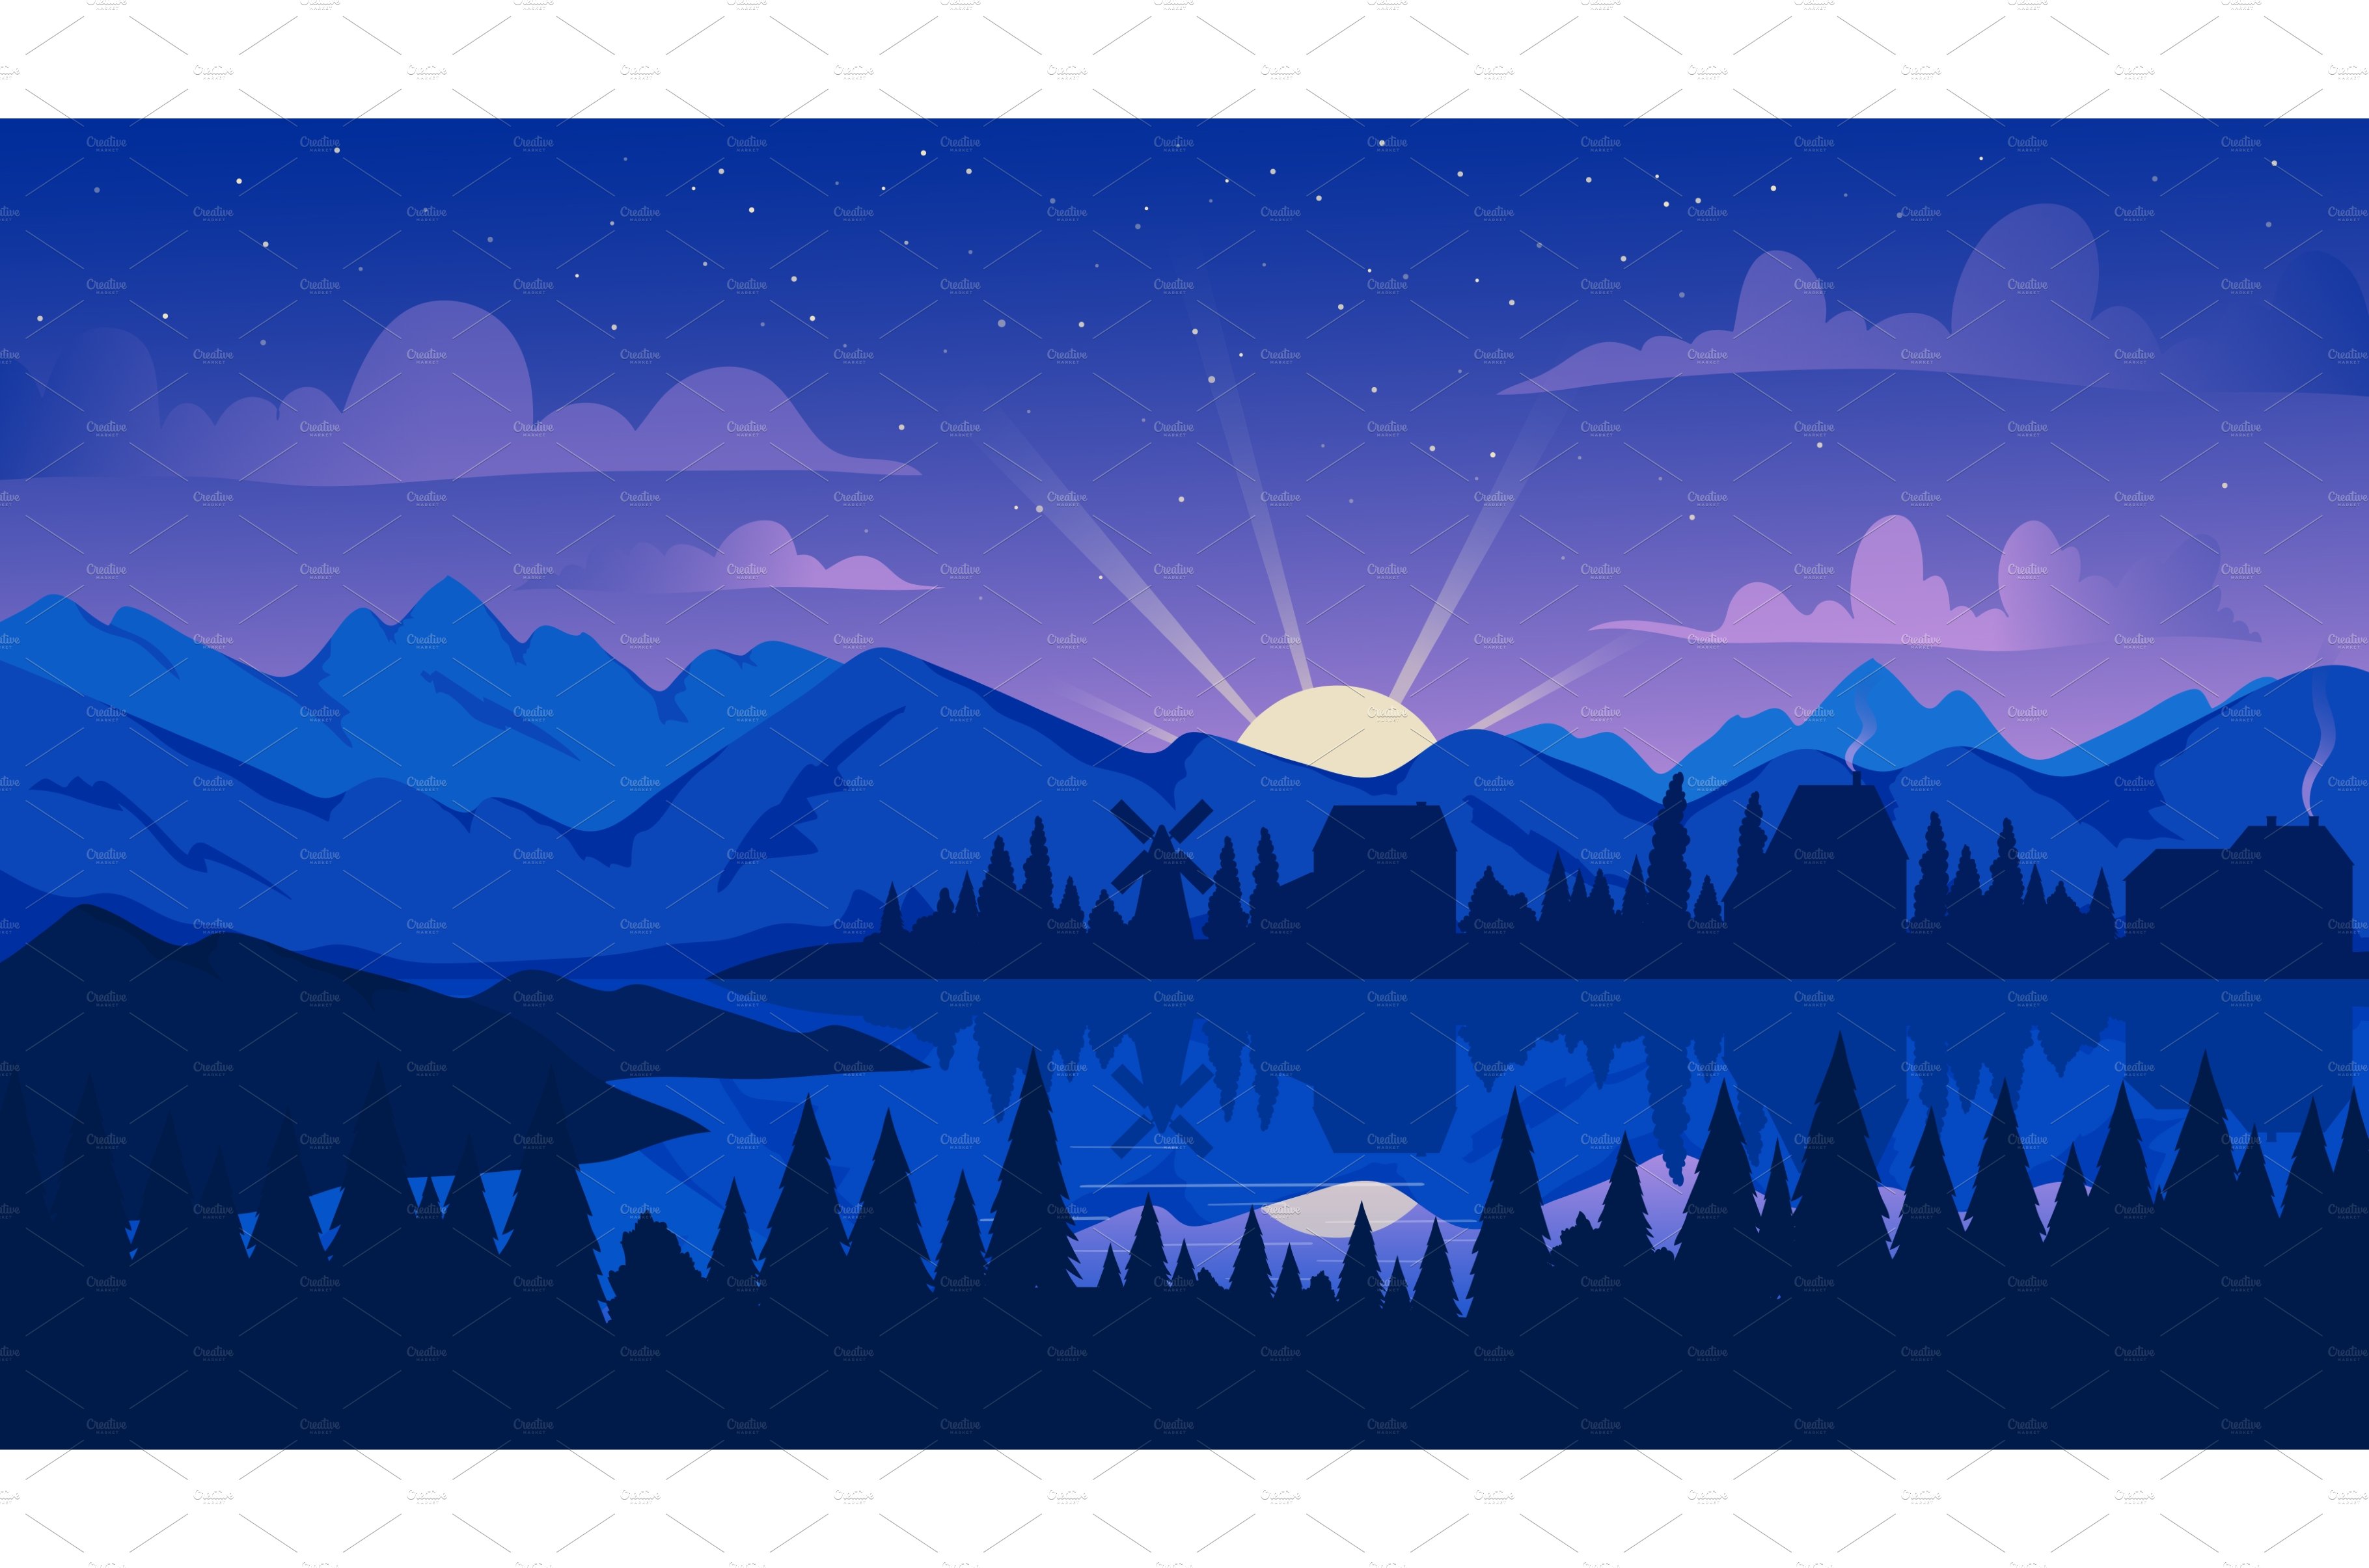 Night lake mountain landscape cover image.